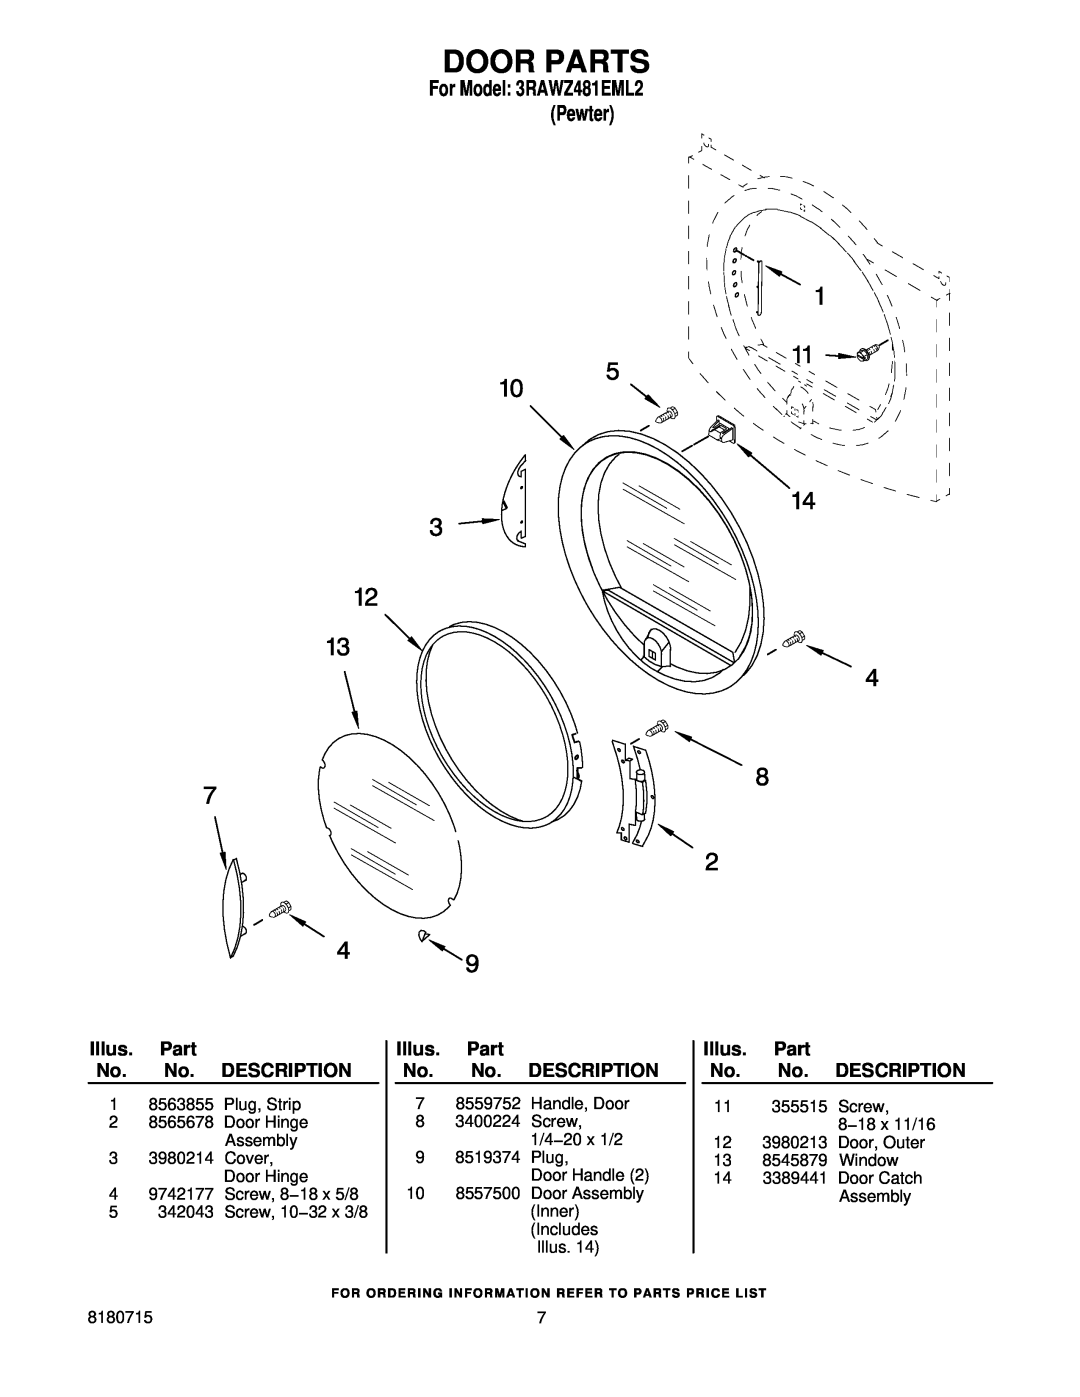 Whirlpool 3RAWZ481EML2 manual Door Parts, Illus. Part No. No. DESCRIPTION, 8 3400224 Screw, 1/4−20 x 1/2 